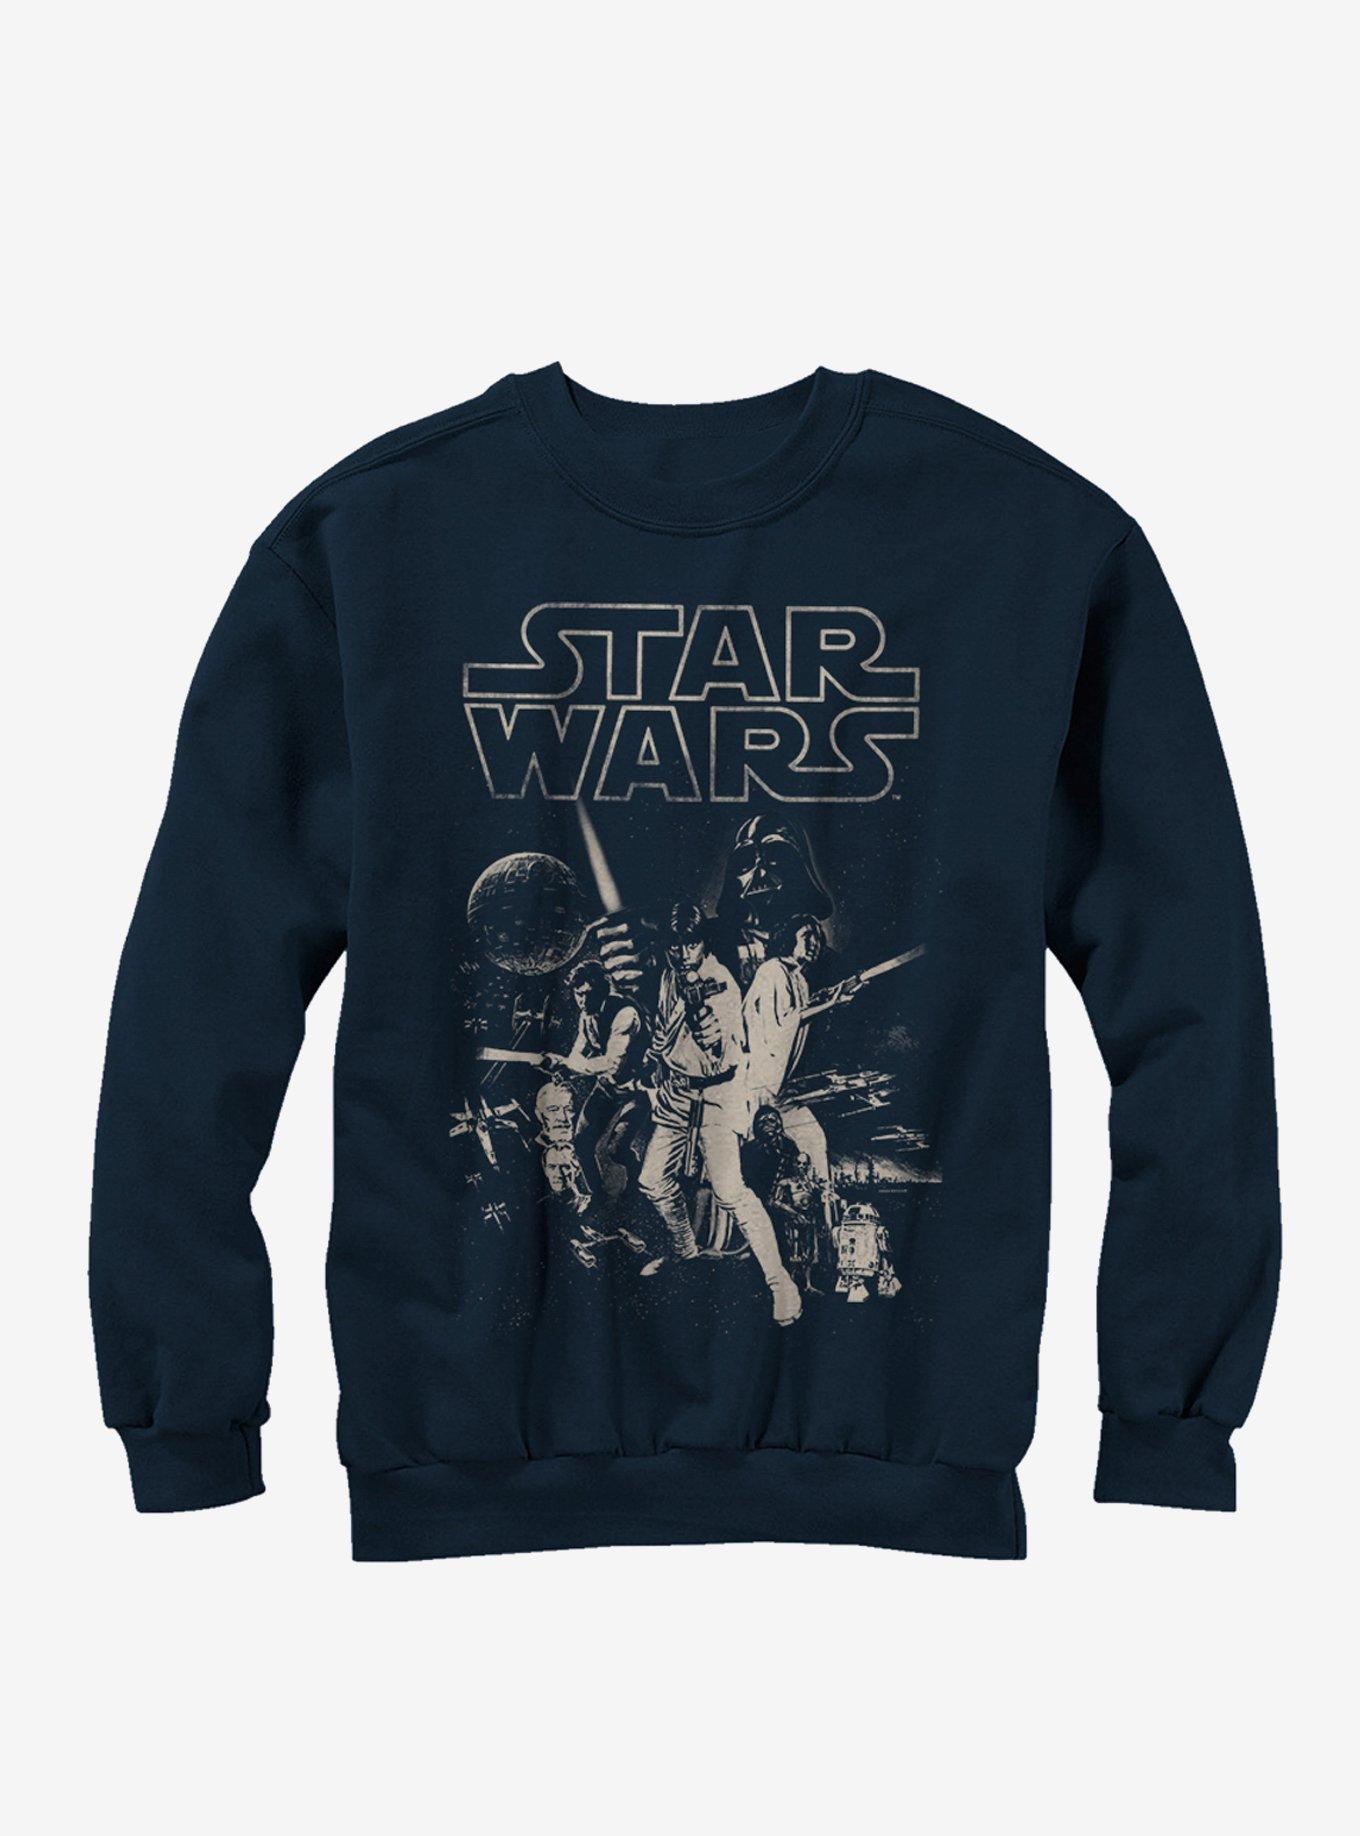 Star Wars Classic Poster Navy Blue Sweatshirt